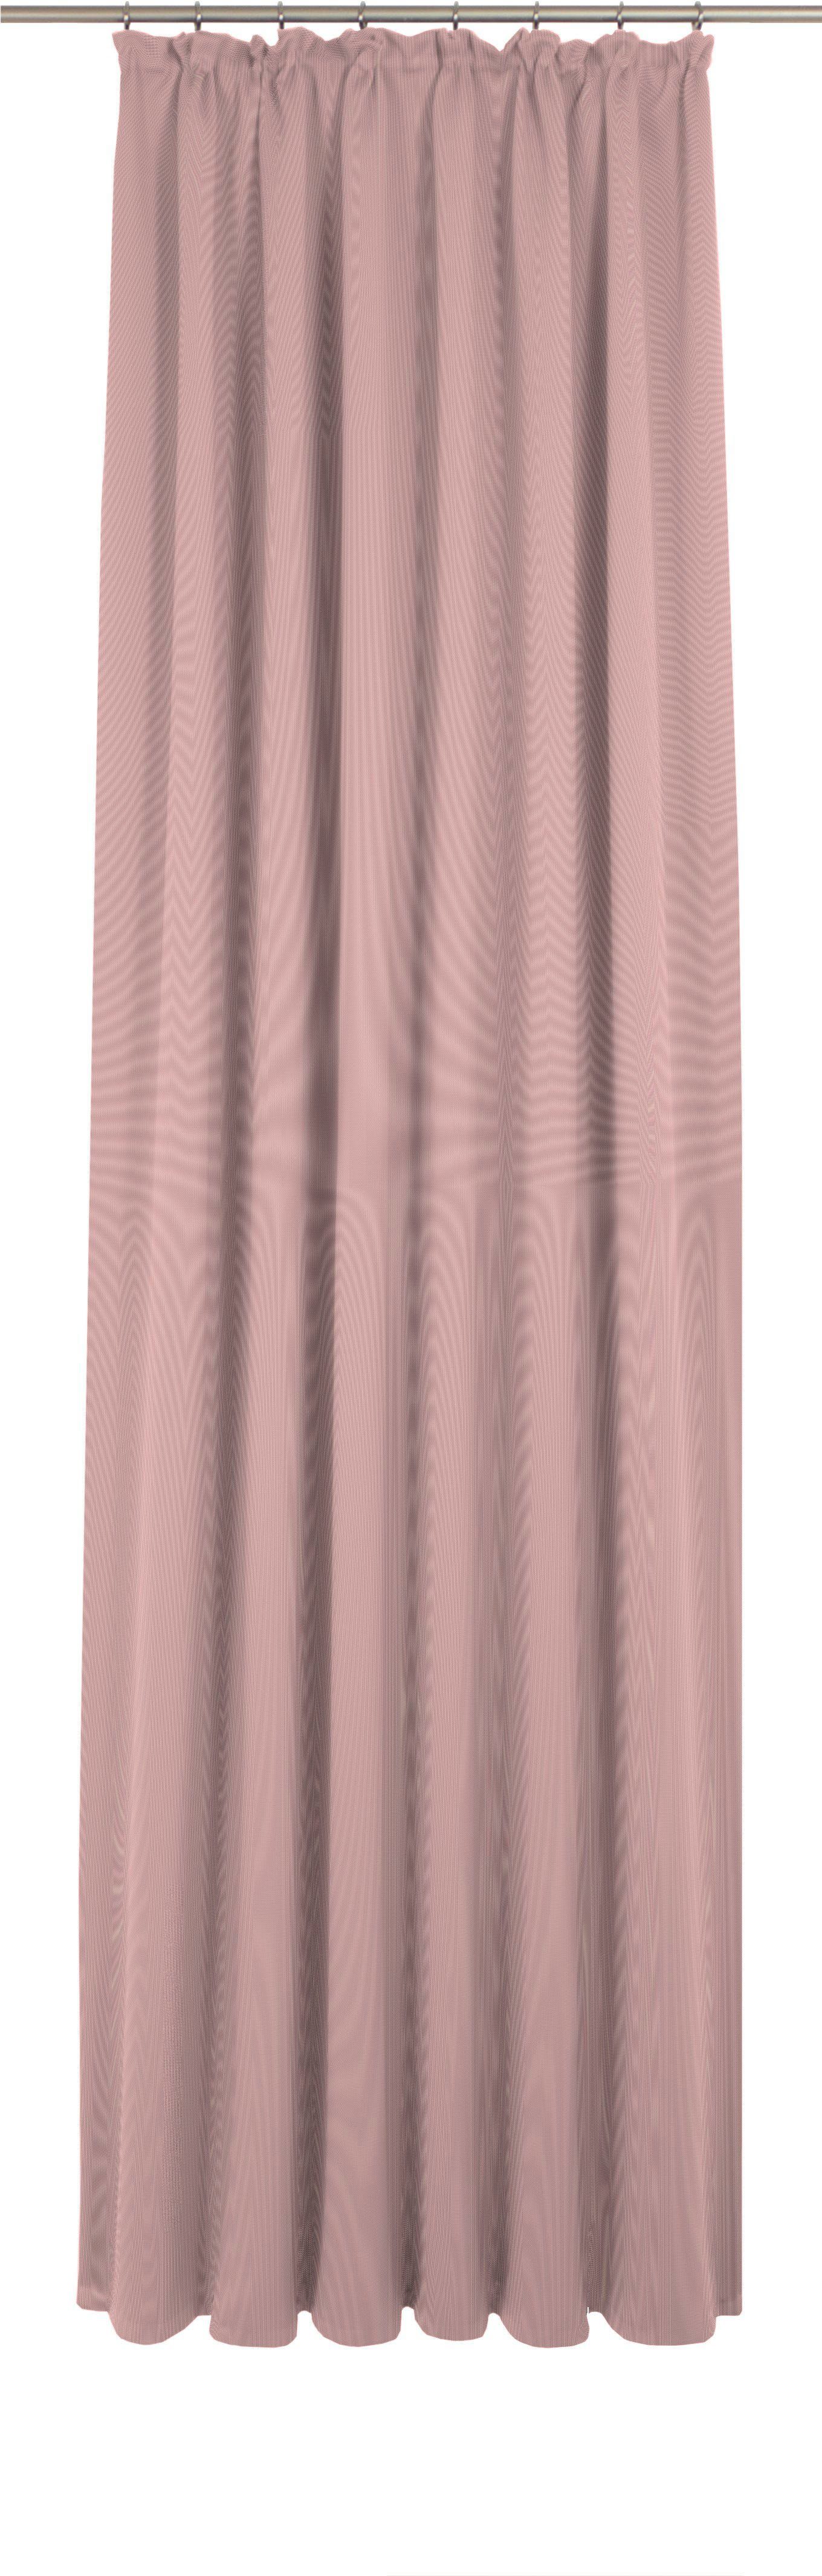 St), Adam, Collection, Jacquard, blickdicht, Kräuselband rosa Uni (1 Vorhang nachhaltig